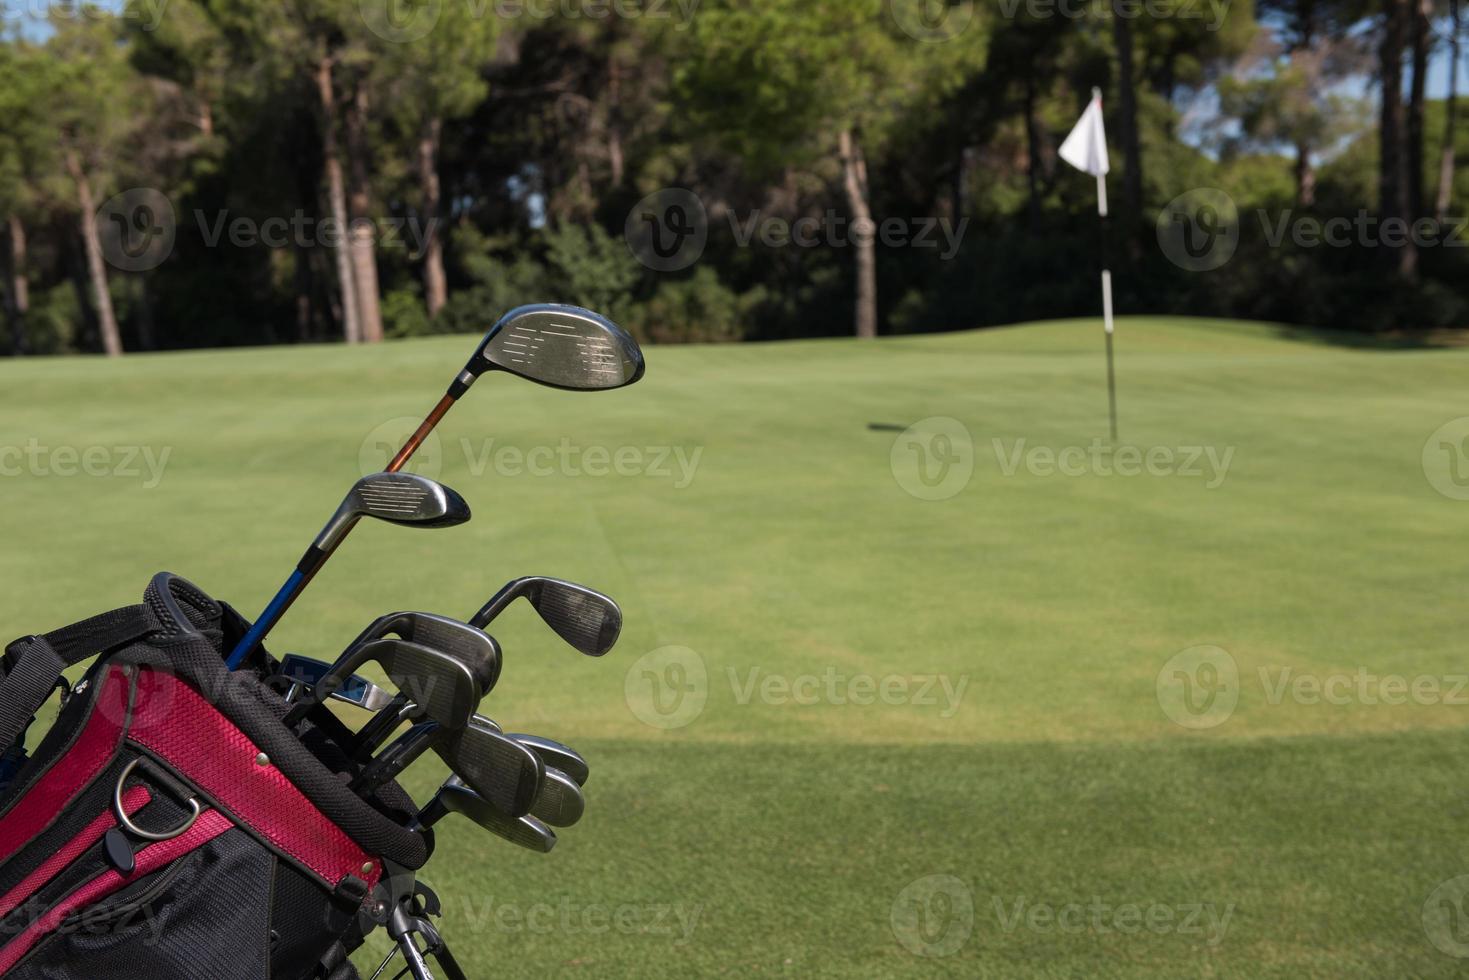 Golftasche auf Kurs hautnah foto